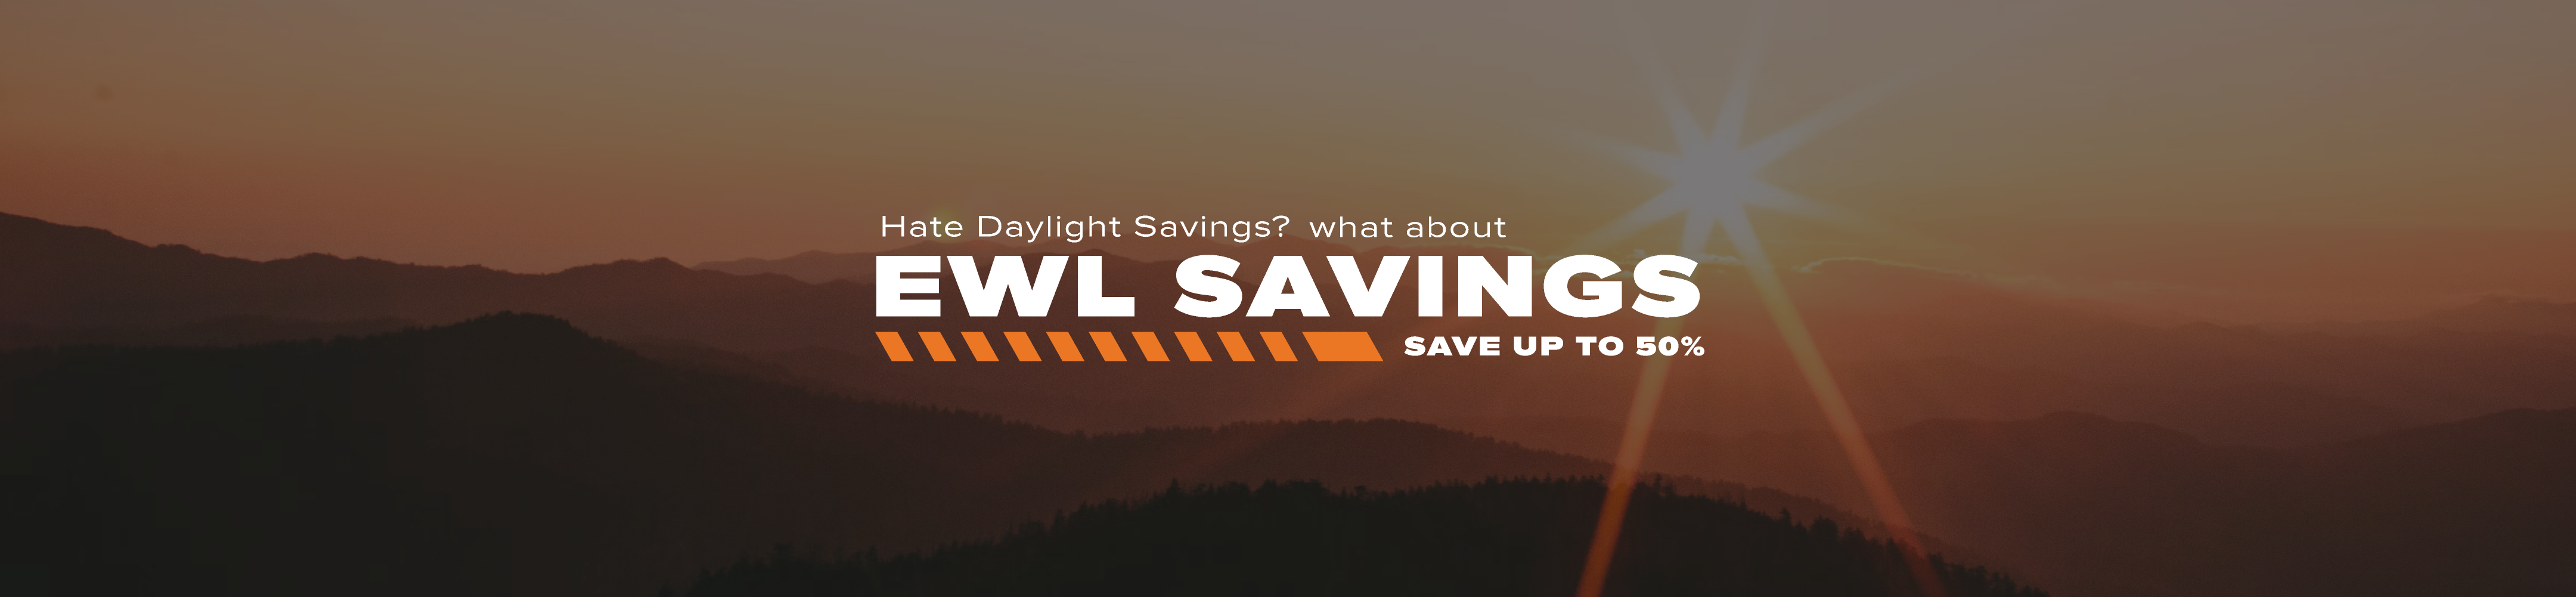 EWL Daylight Savings